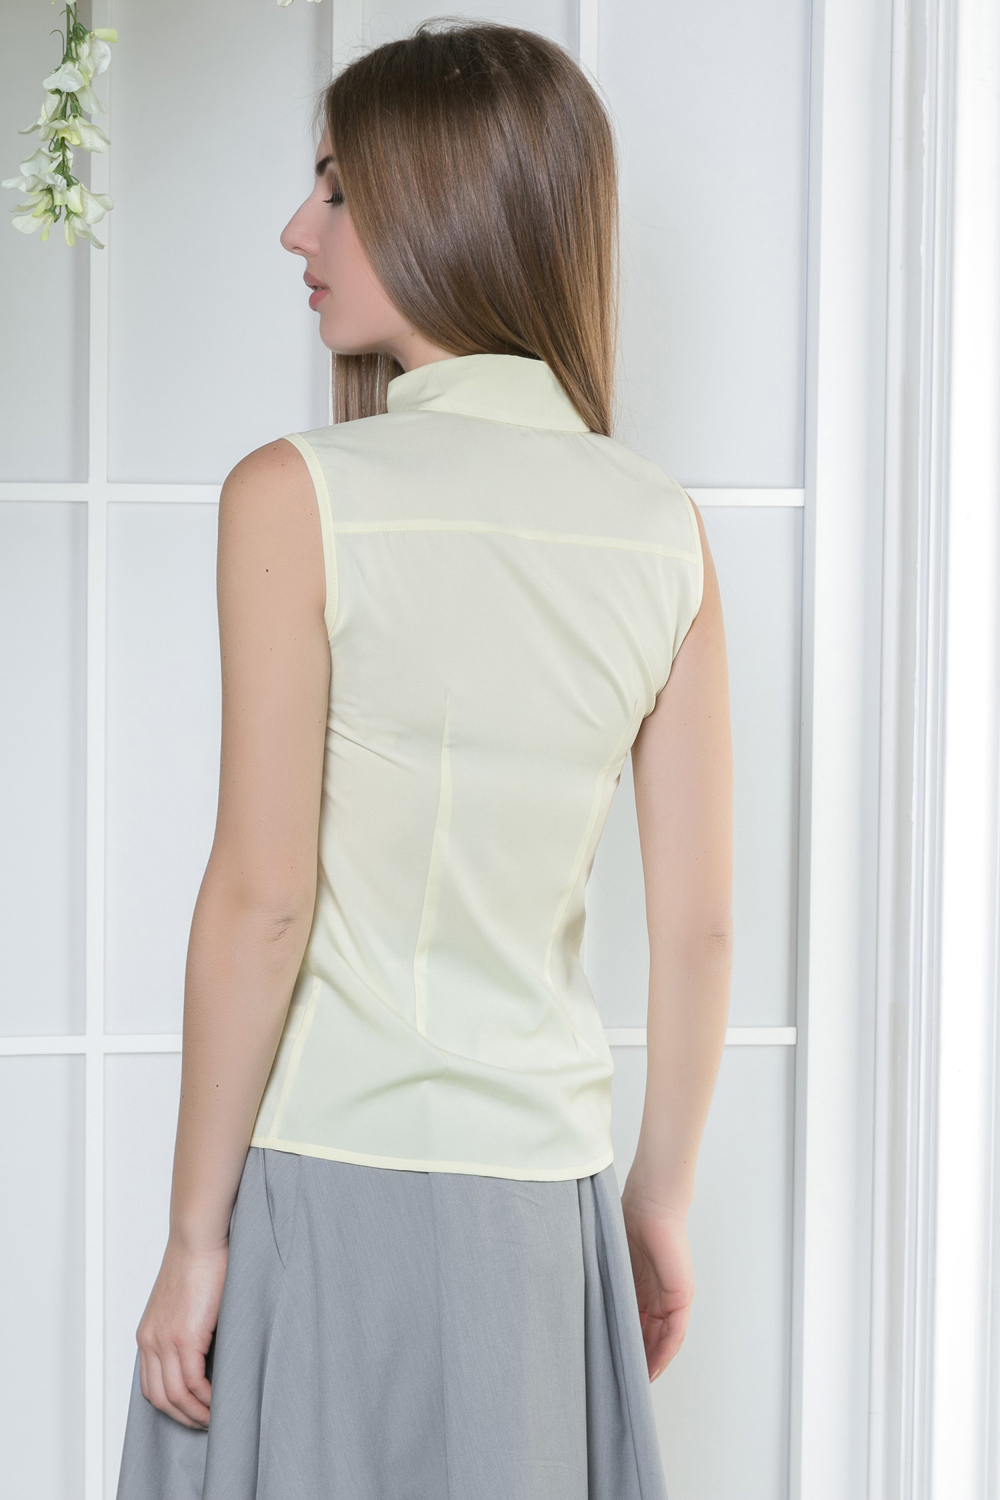 Yellow sleeveless blouse